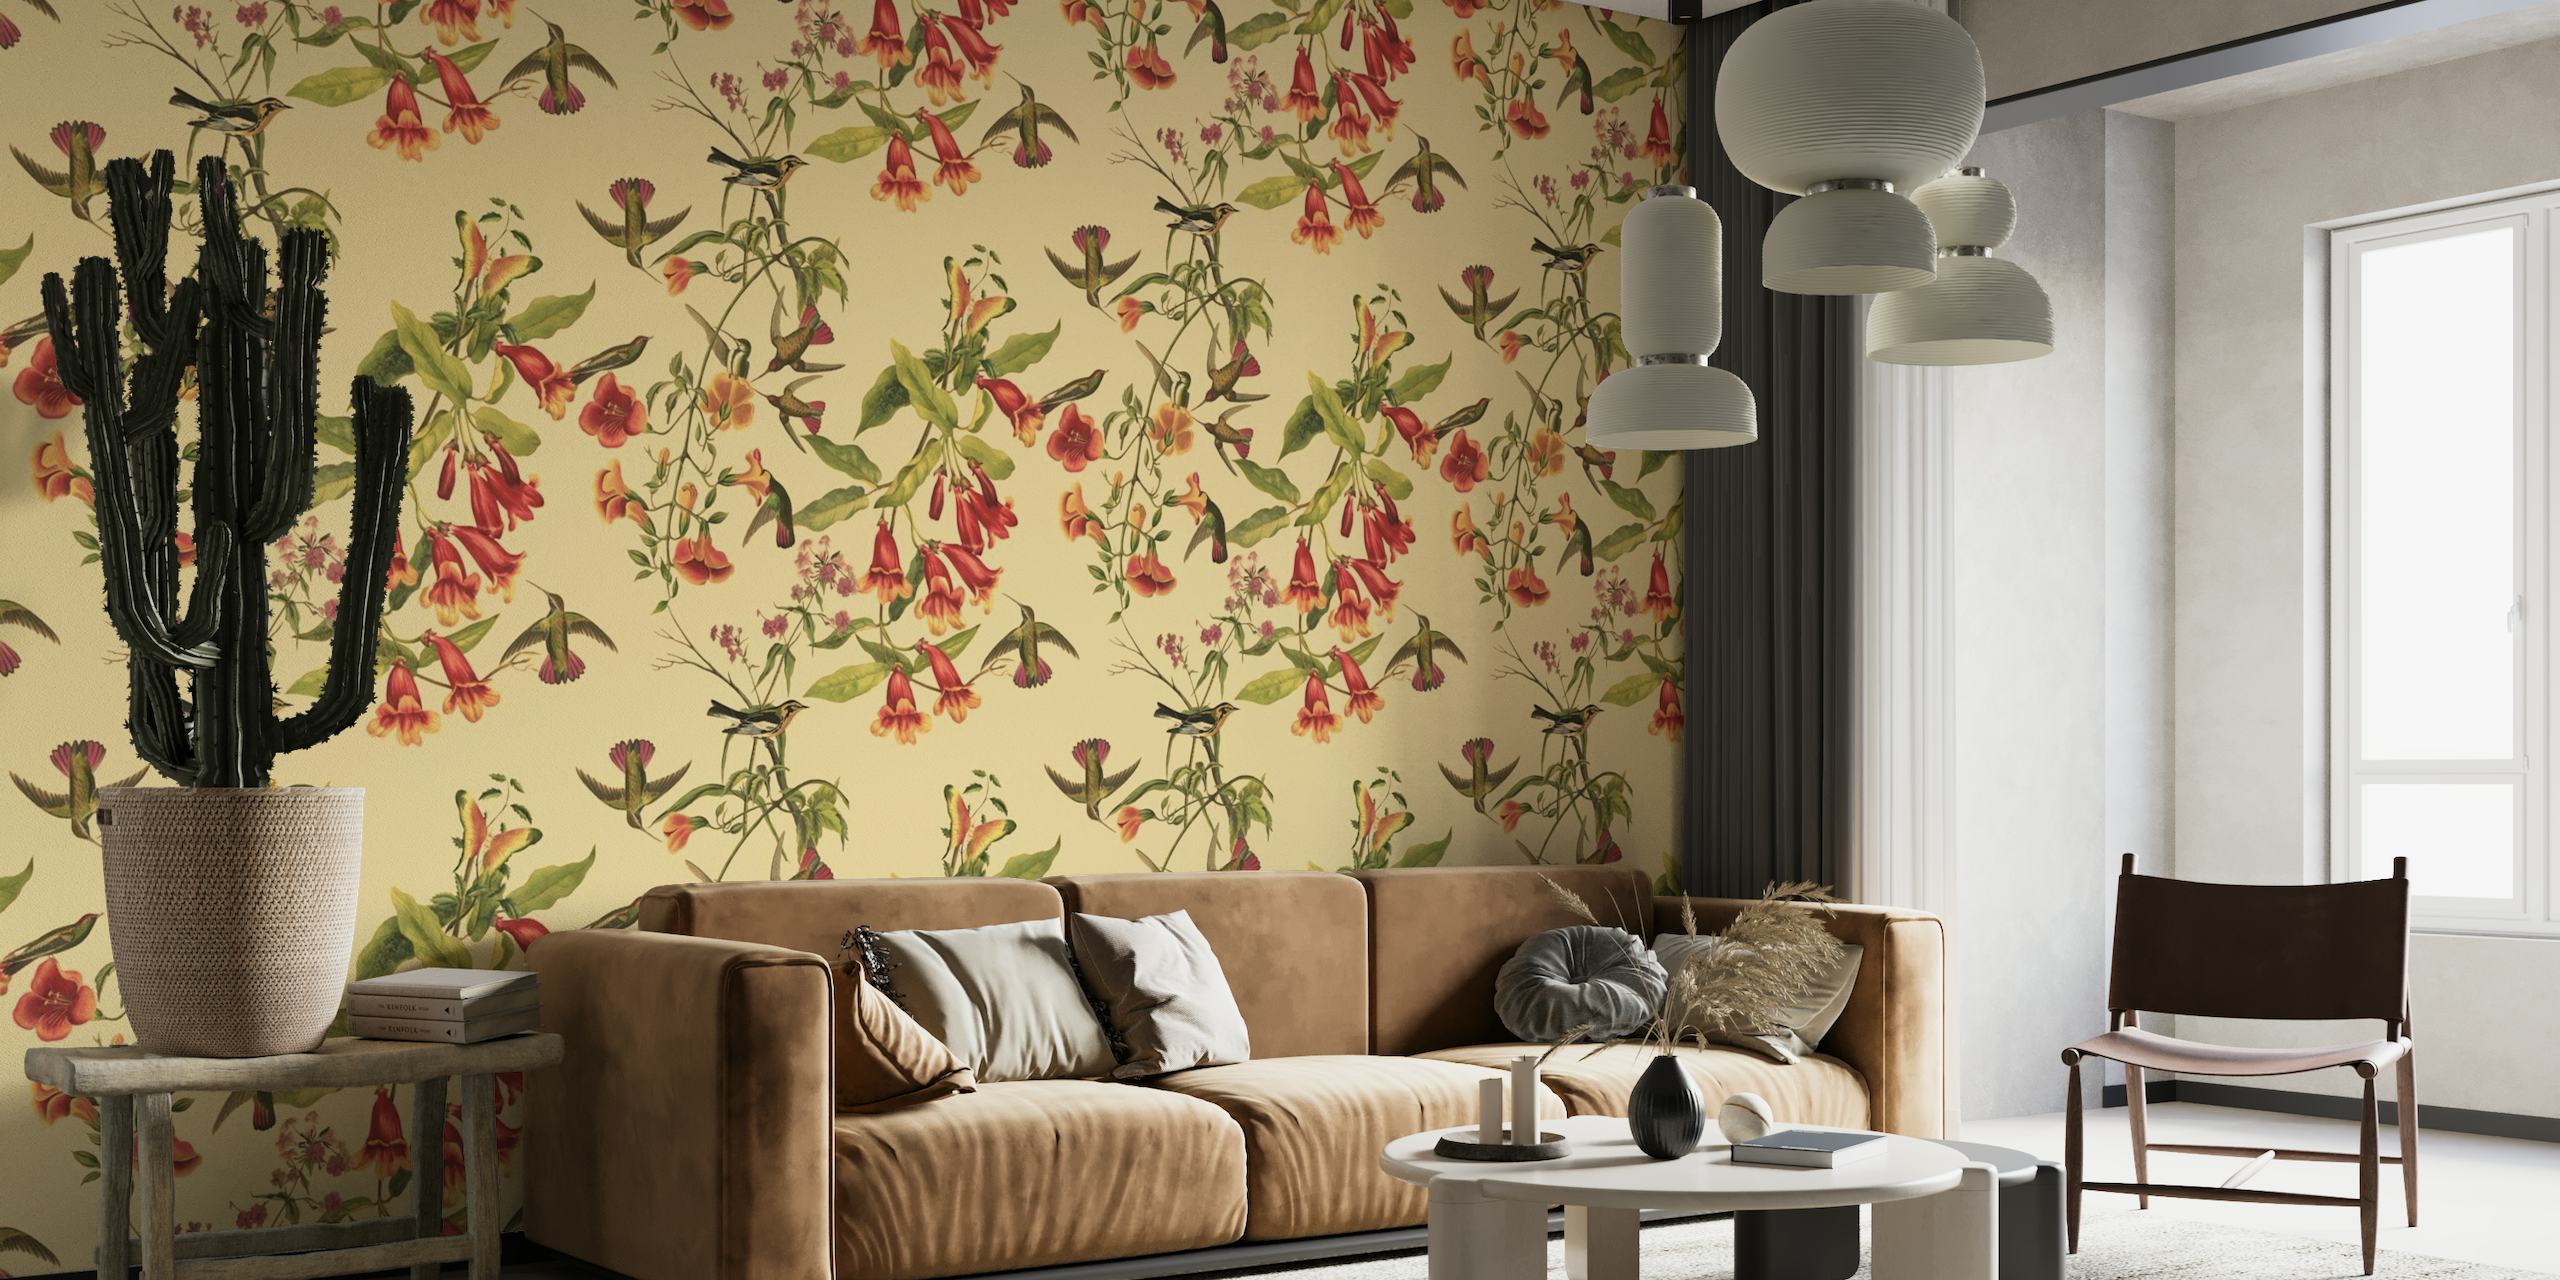 Elegantni kolibrići i starinski zidni mural s cvjetnim uzorkom na neutralnoj pozadini